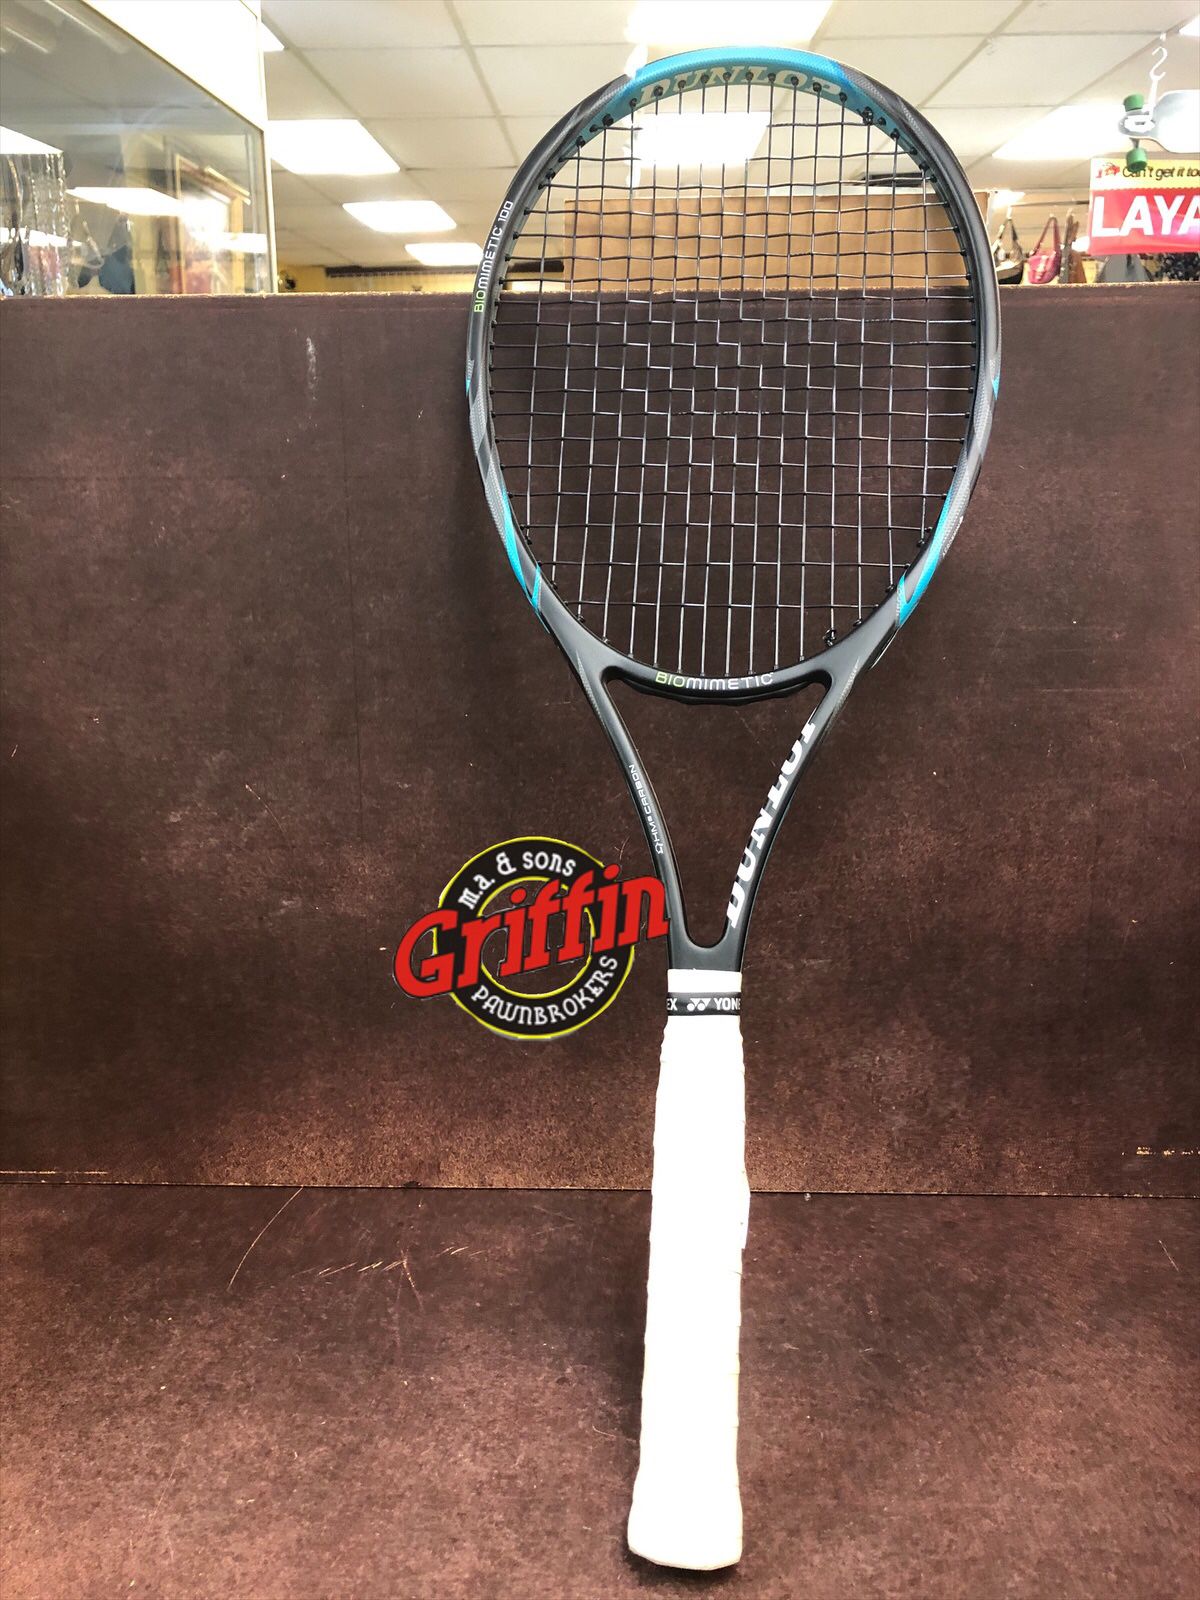 Biomimetic tennis racket